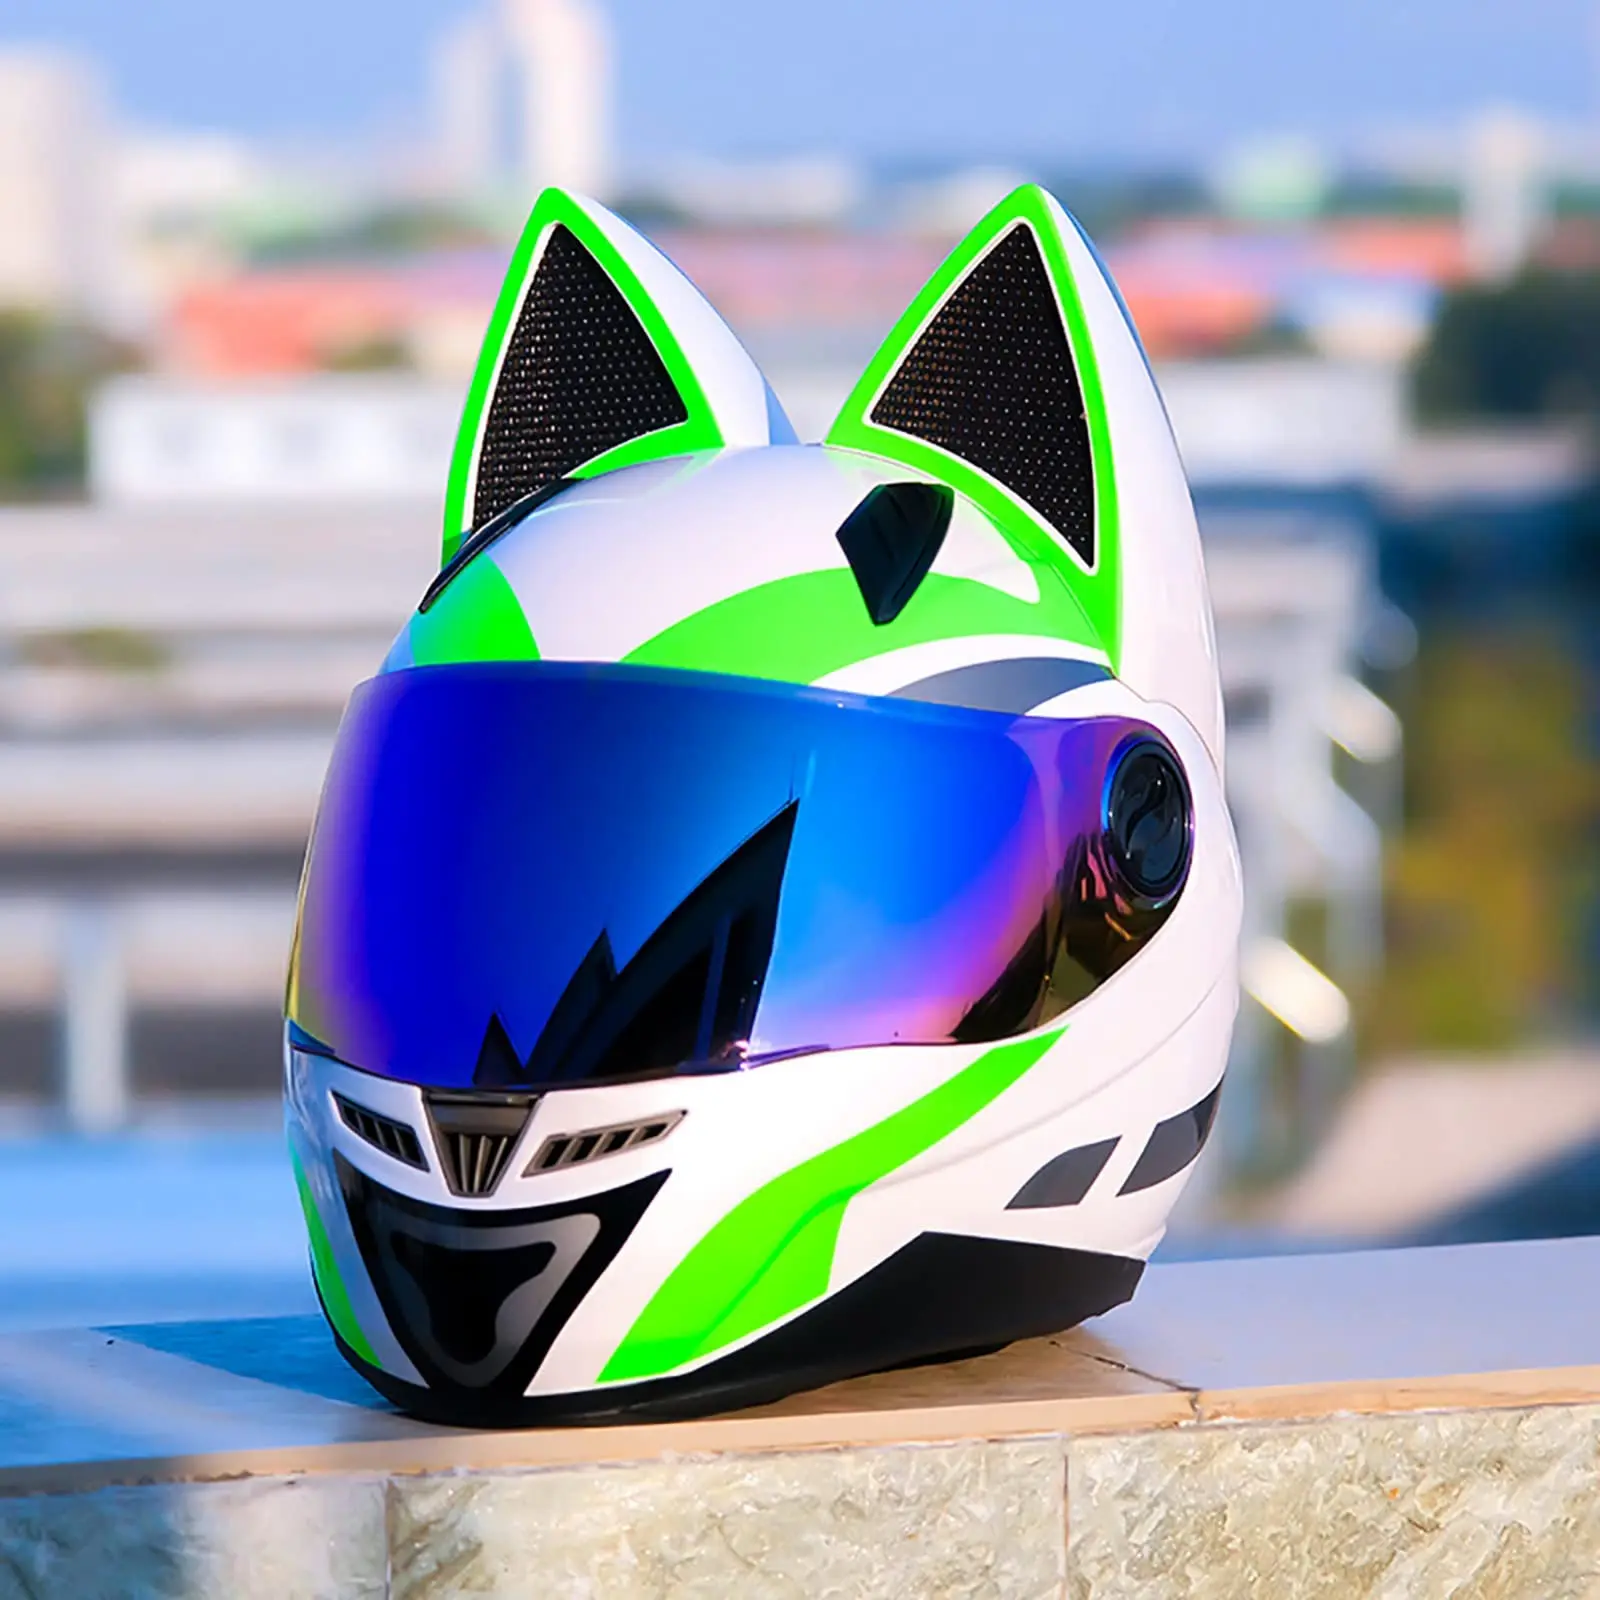 personalizar casco moto - Qué se necesita para pintar un casco de moto